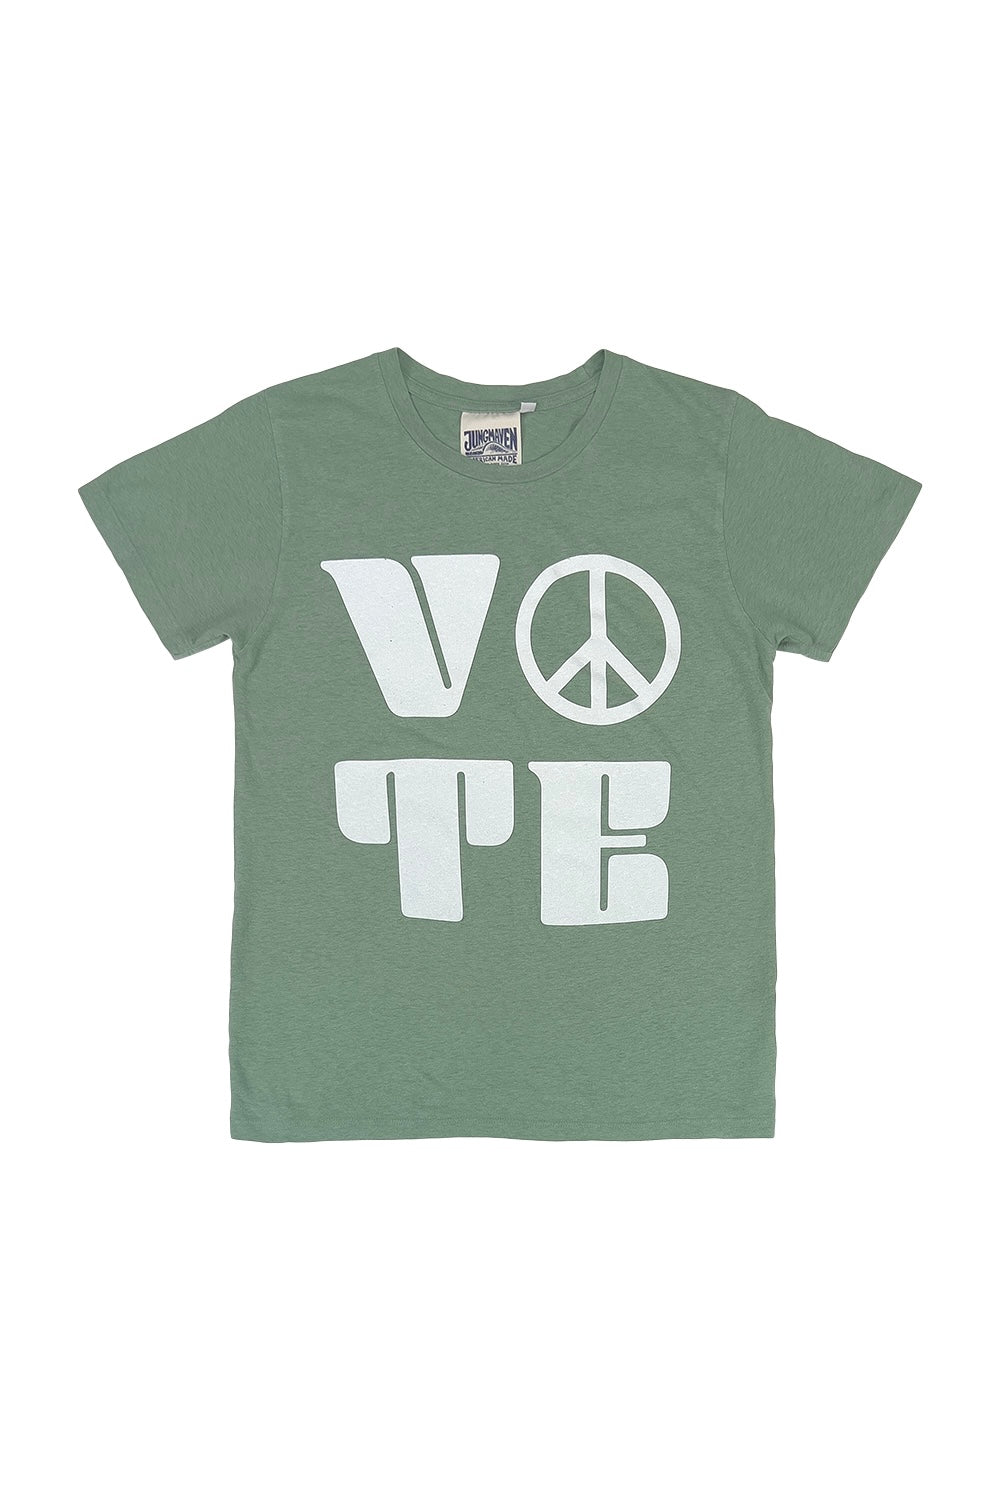 Vote Peace Lorel Tee | Jungmaven Hemp Clothing & Accessories / Color:Sage Green